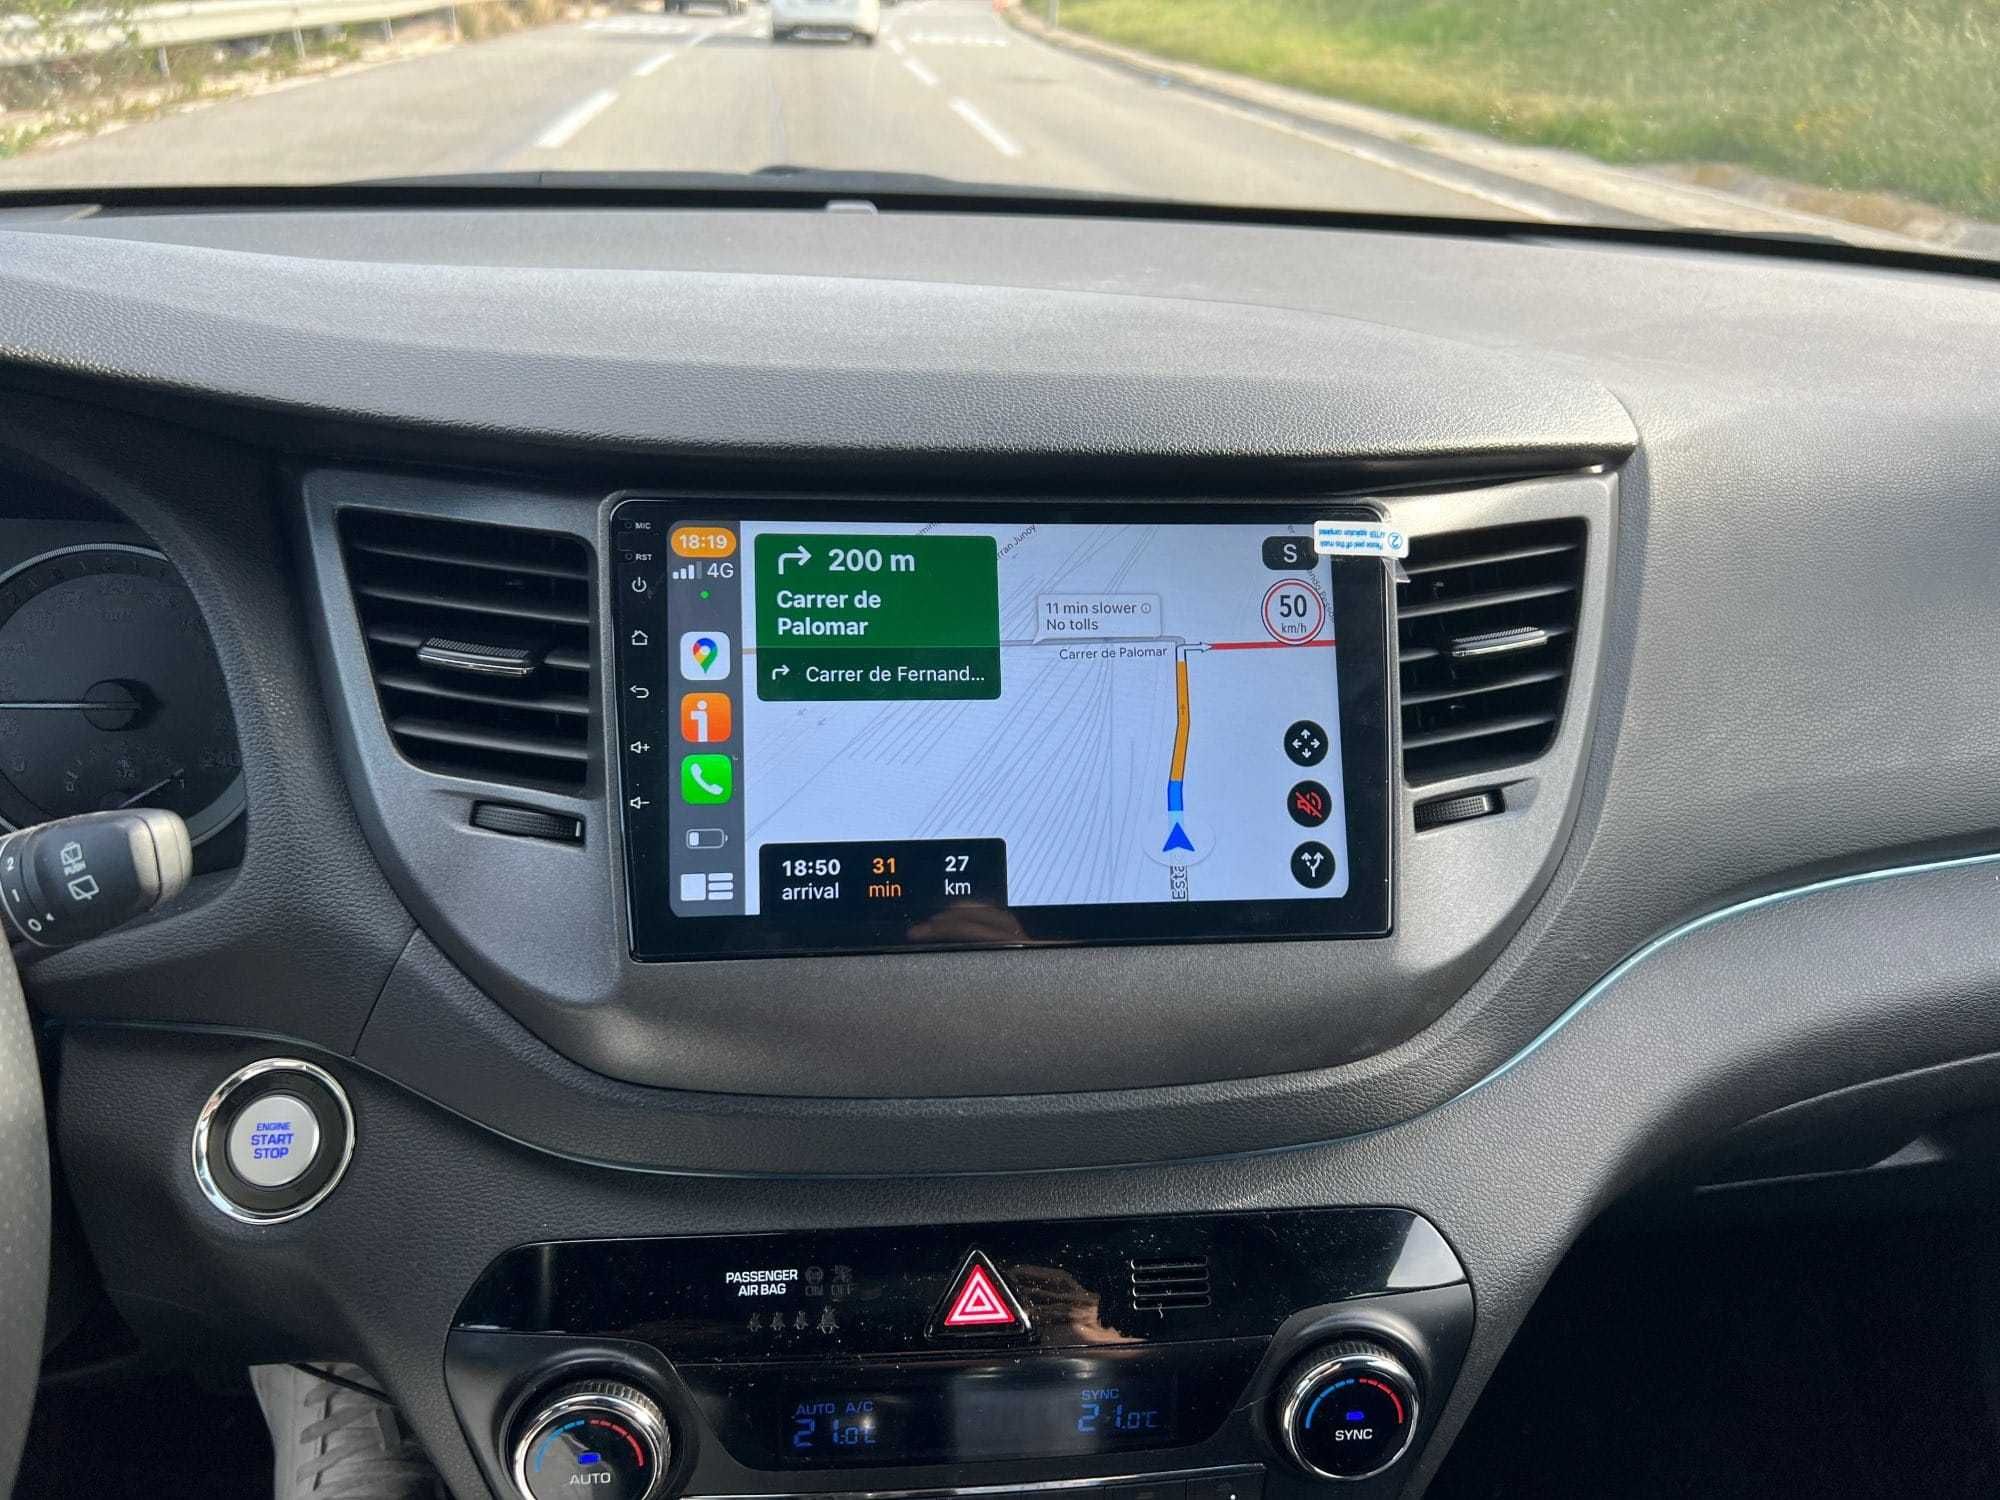 Navigatie Android Hyundai Tucson 2015-2018 Waze YouTube GPS BT USB